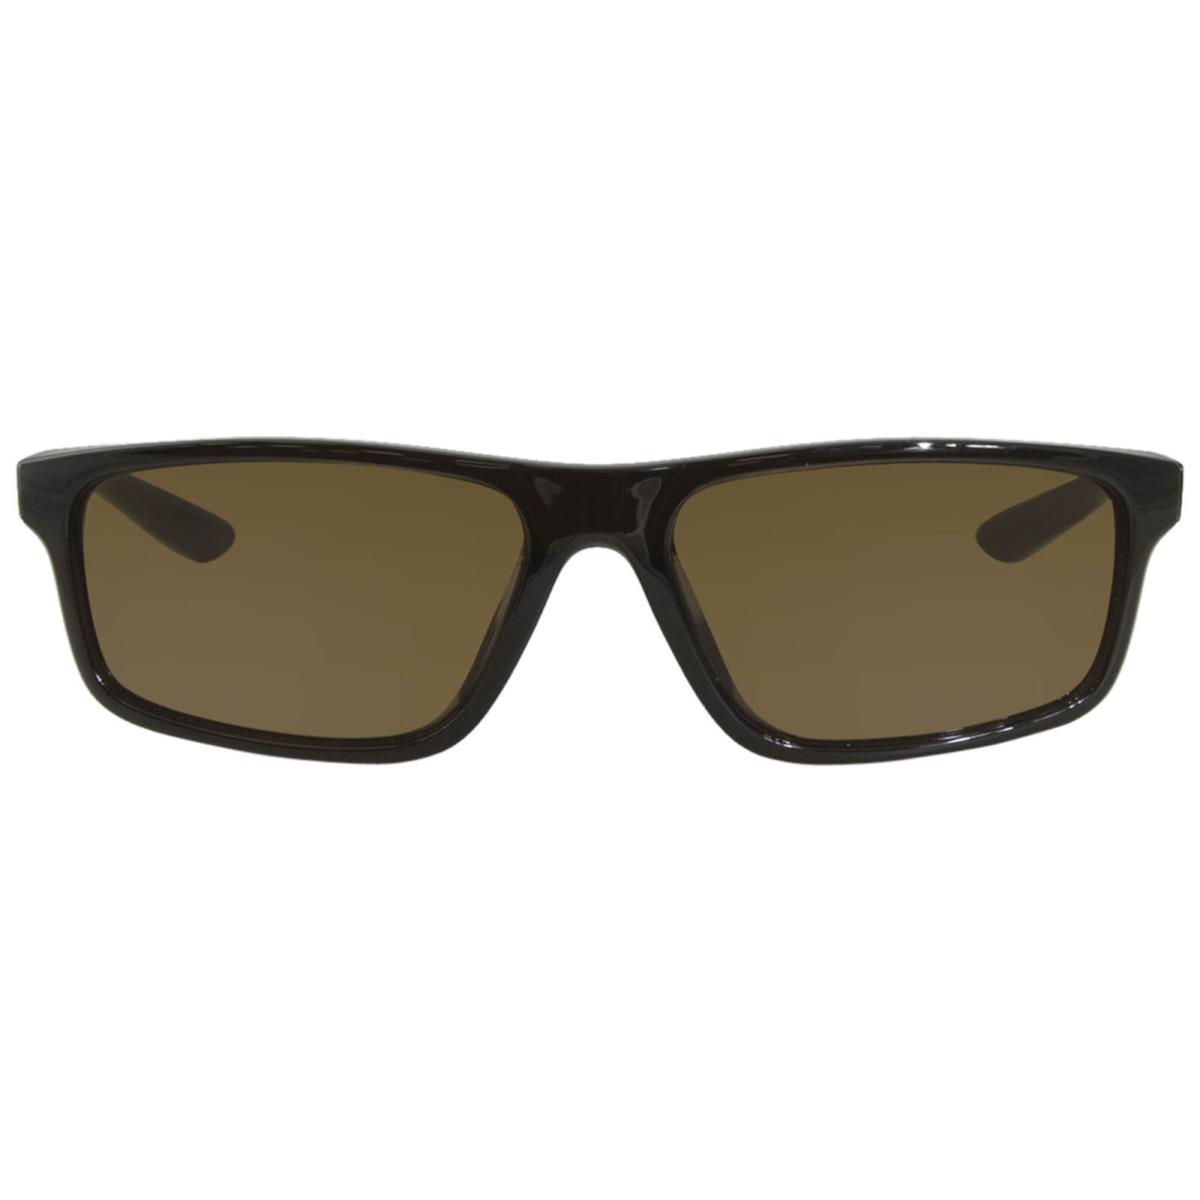 Nike Chronicle CW4656 220 Sunglasses Men`s Brown/brown Lenses Rectangular 59mm - Frame: Brown, Lens: Brown